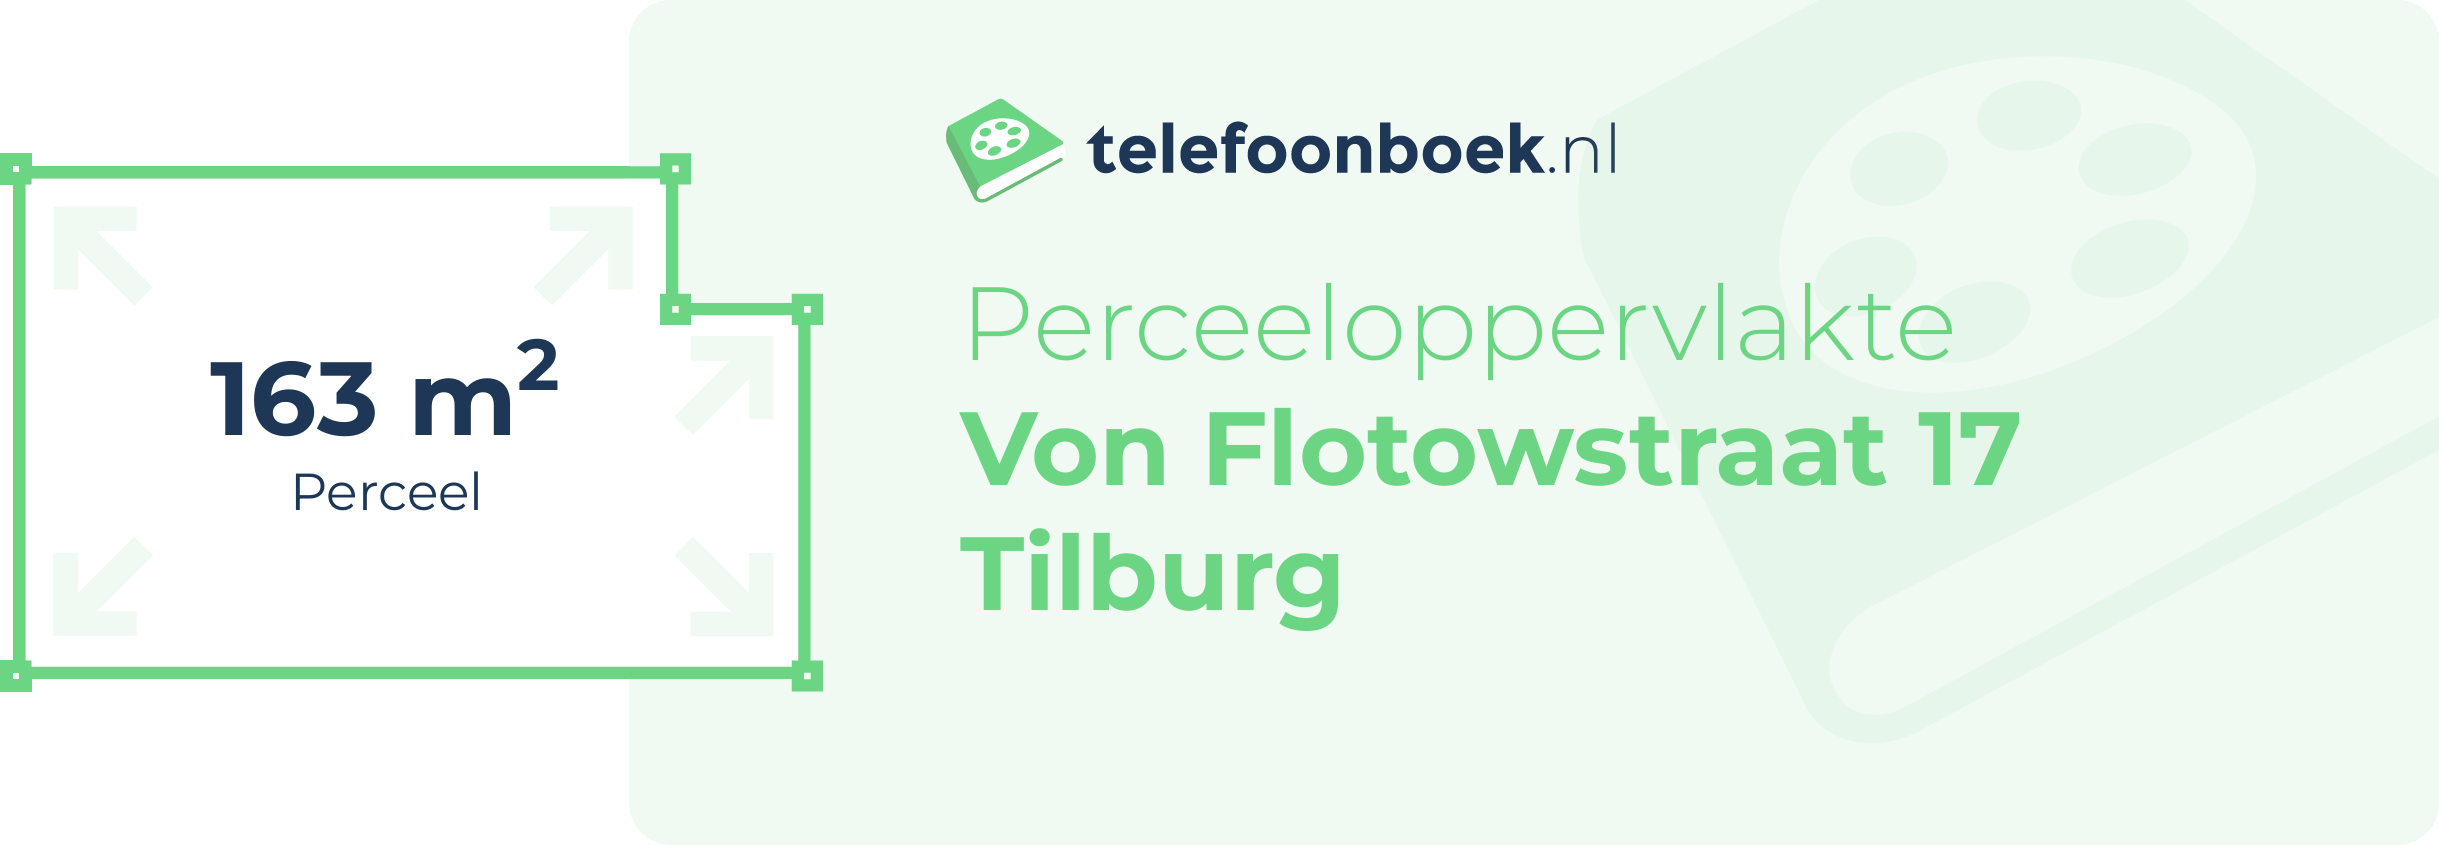 Perceeloppervlakte Von Flotowstraat 17 Tilburg